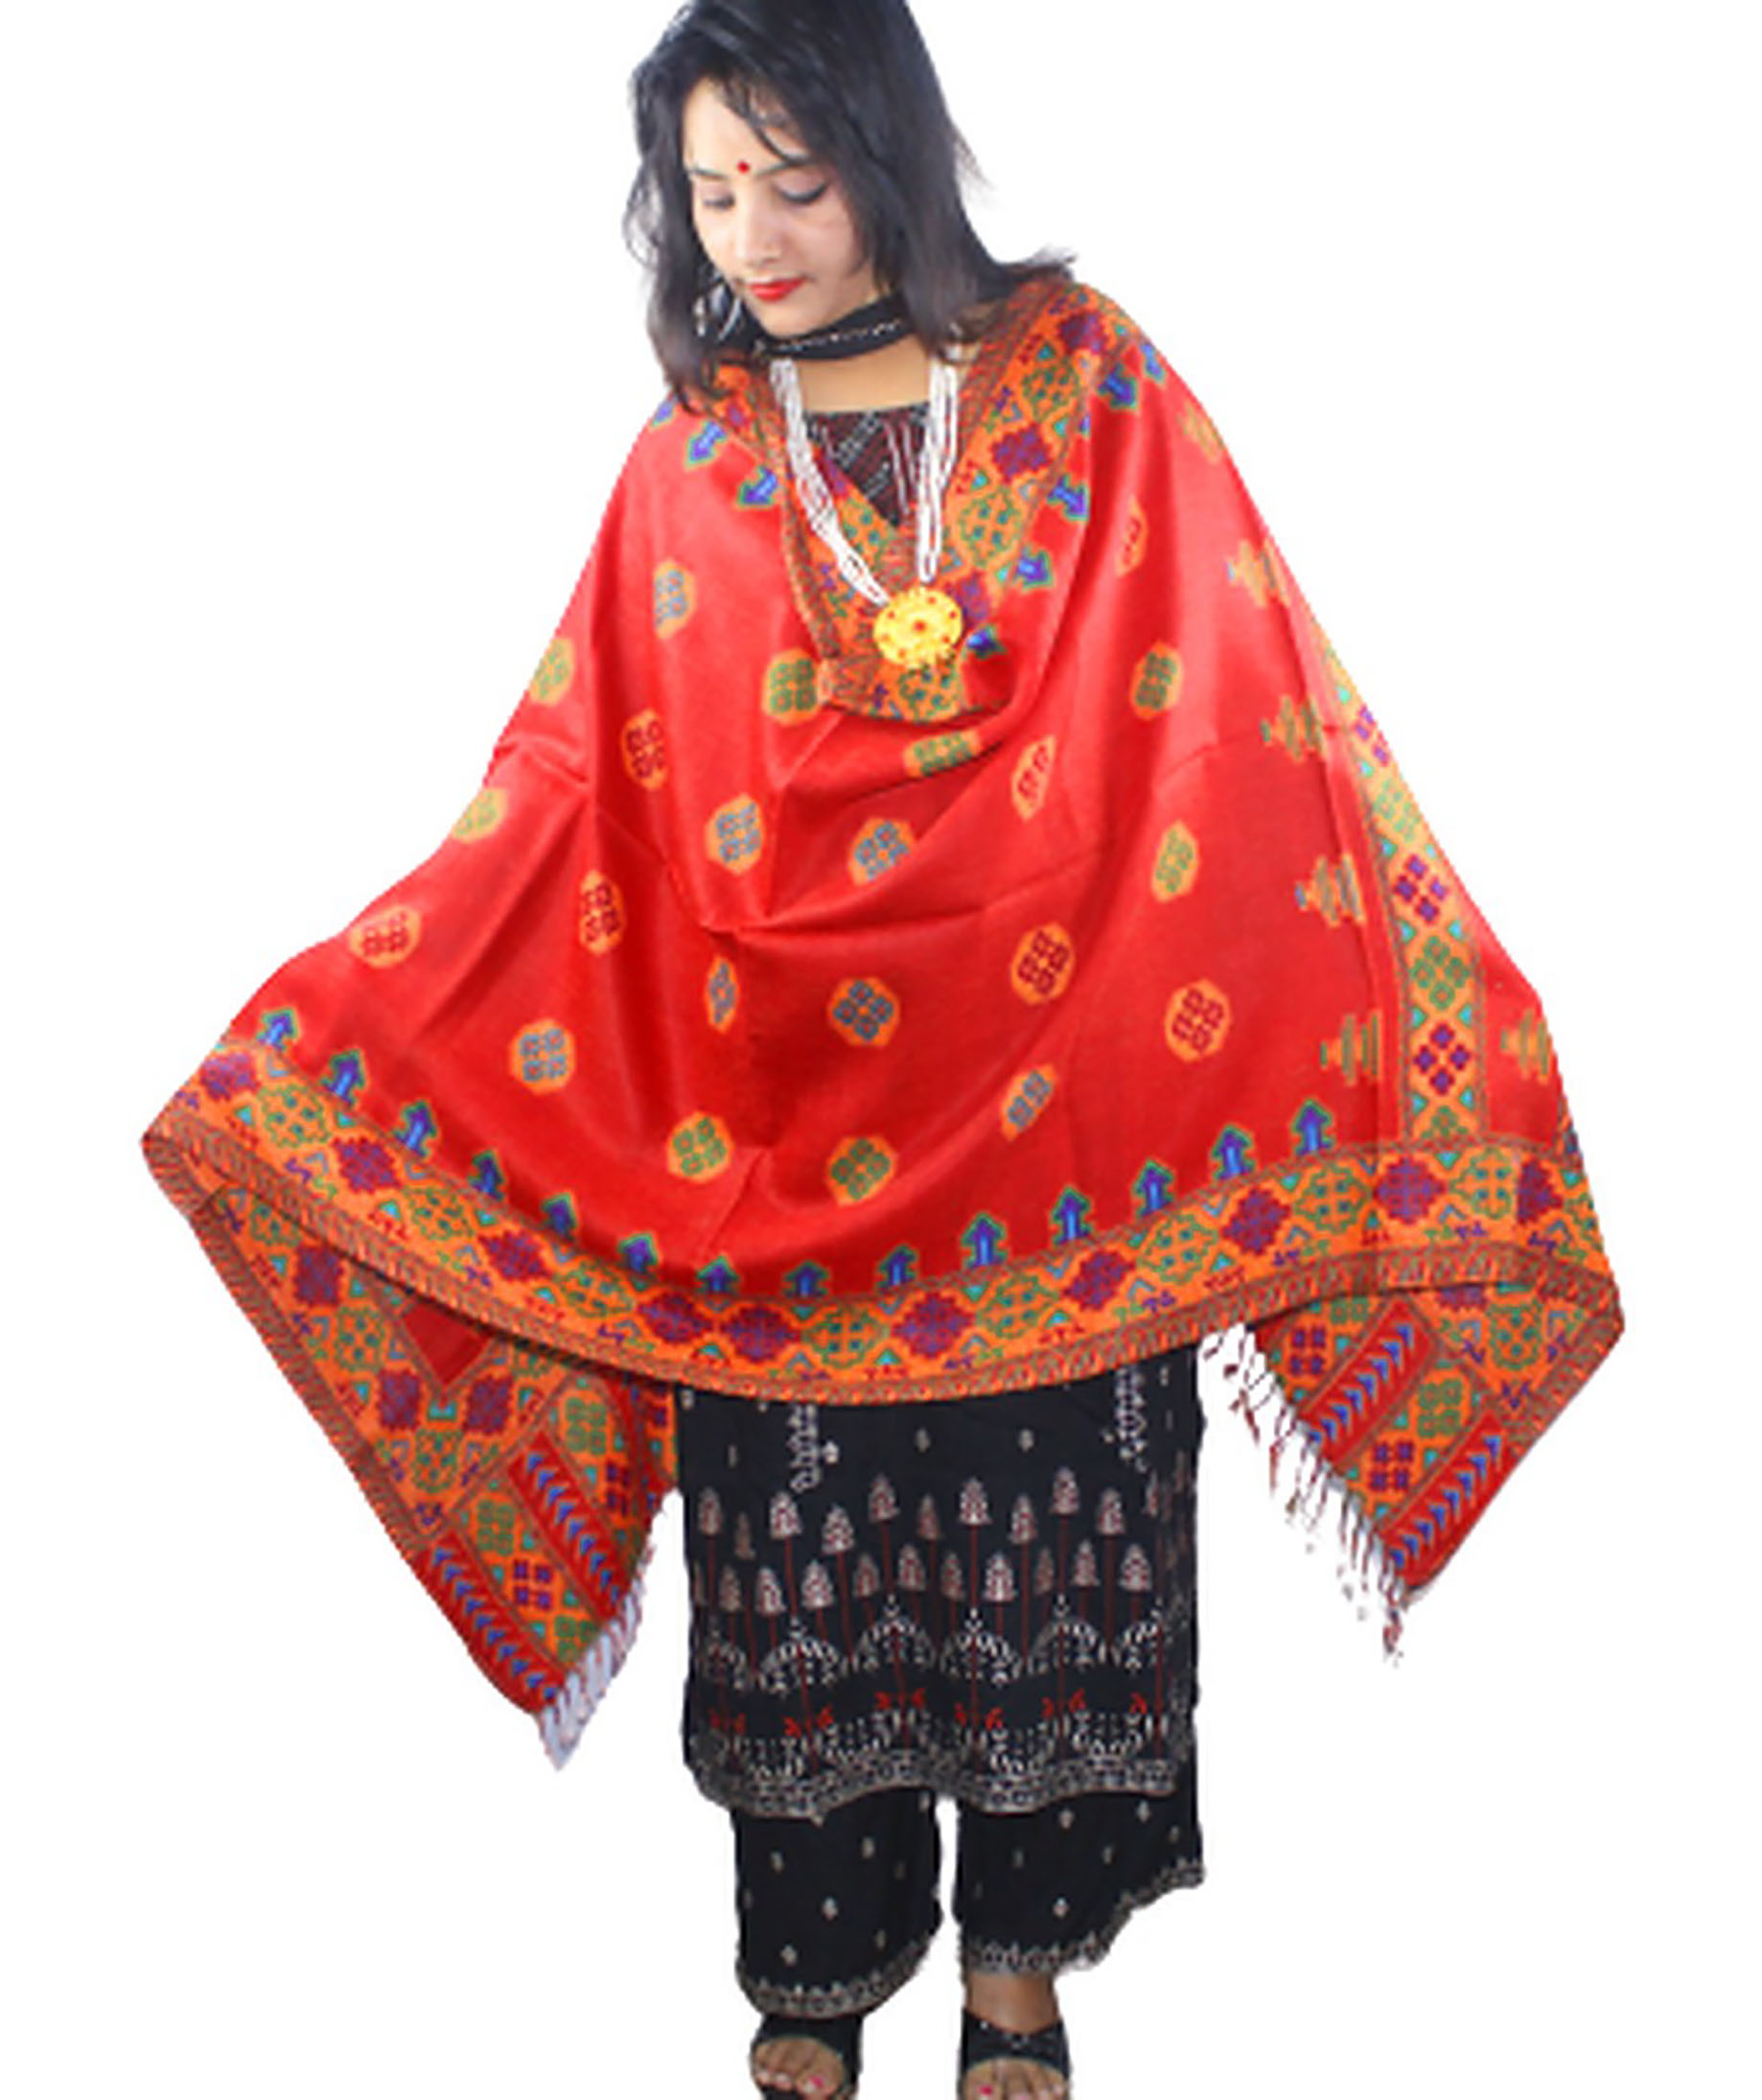 Gaddi dress 👗♥️ Himachal... - Anika's beautiful Himachal | Facebook